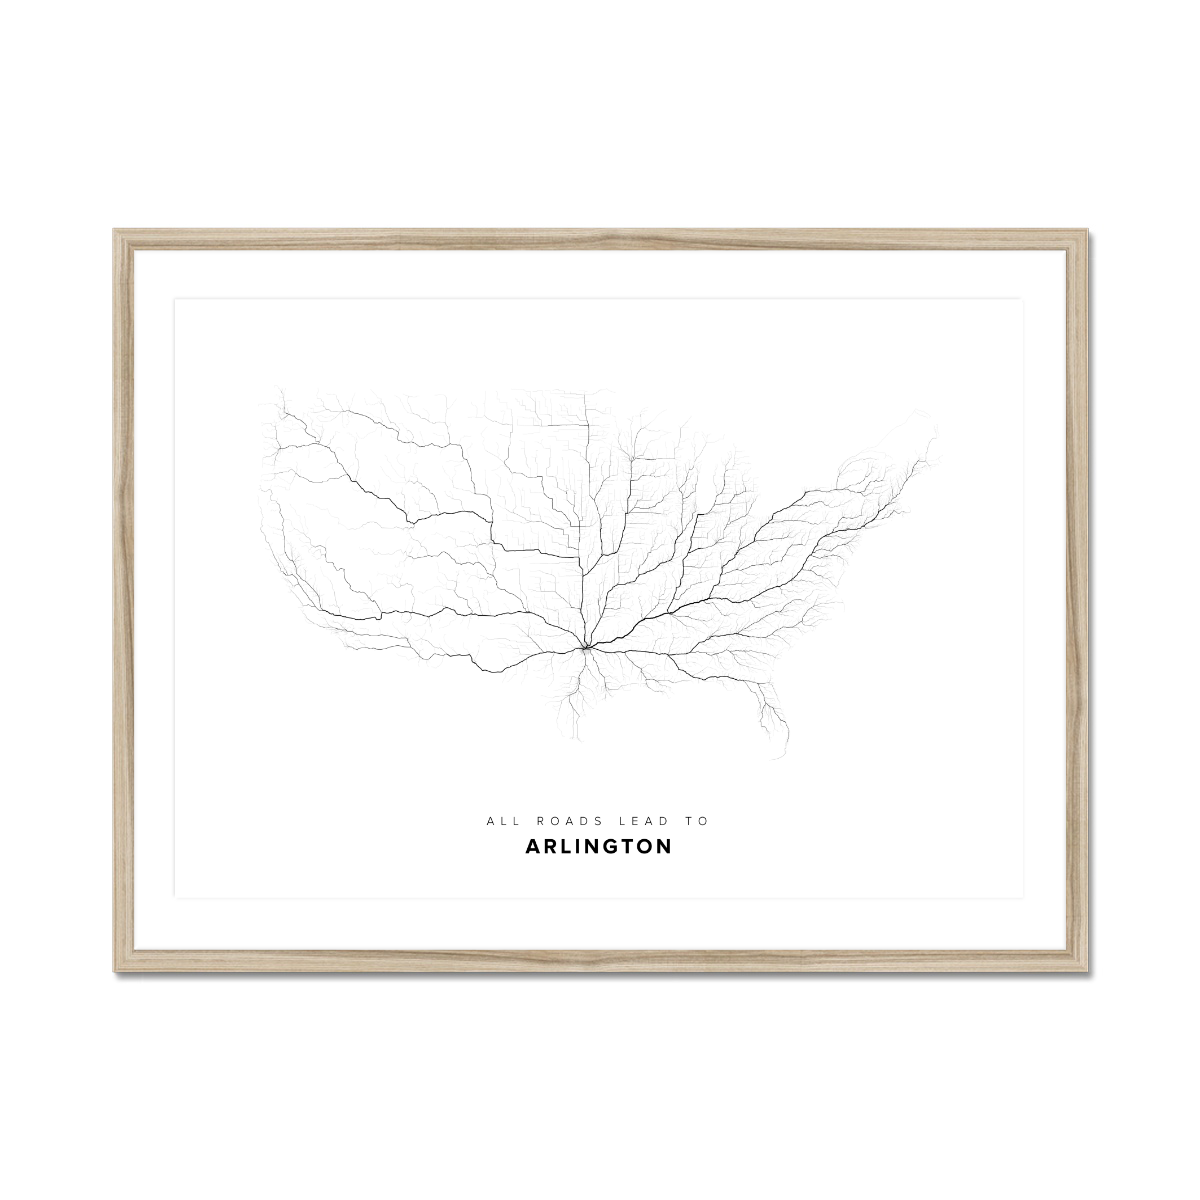 All roads lead to Arlington (United States of America) Fine Art Map Print